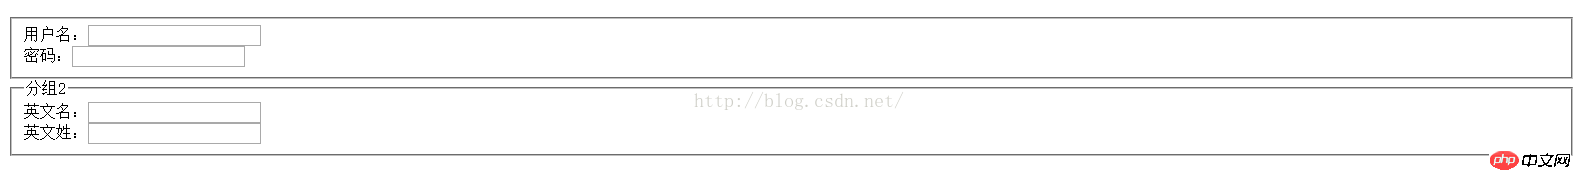 HTML5基础标签与SEO的代码实例详解